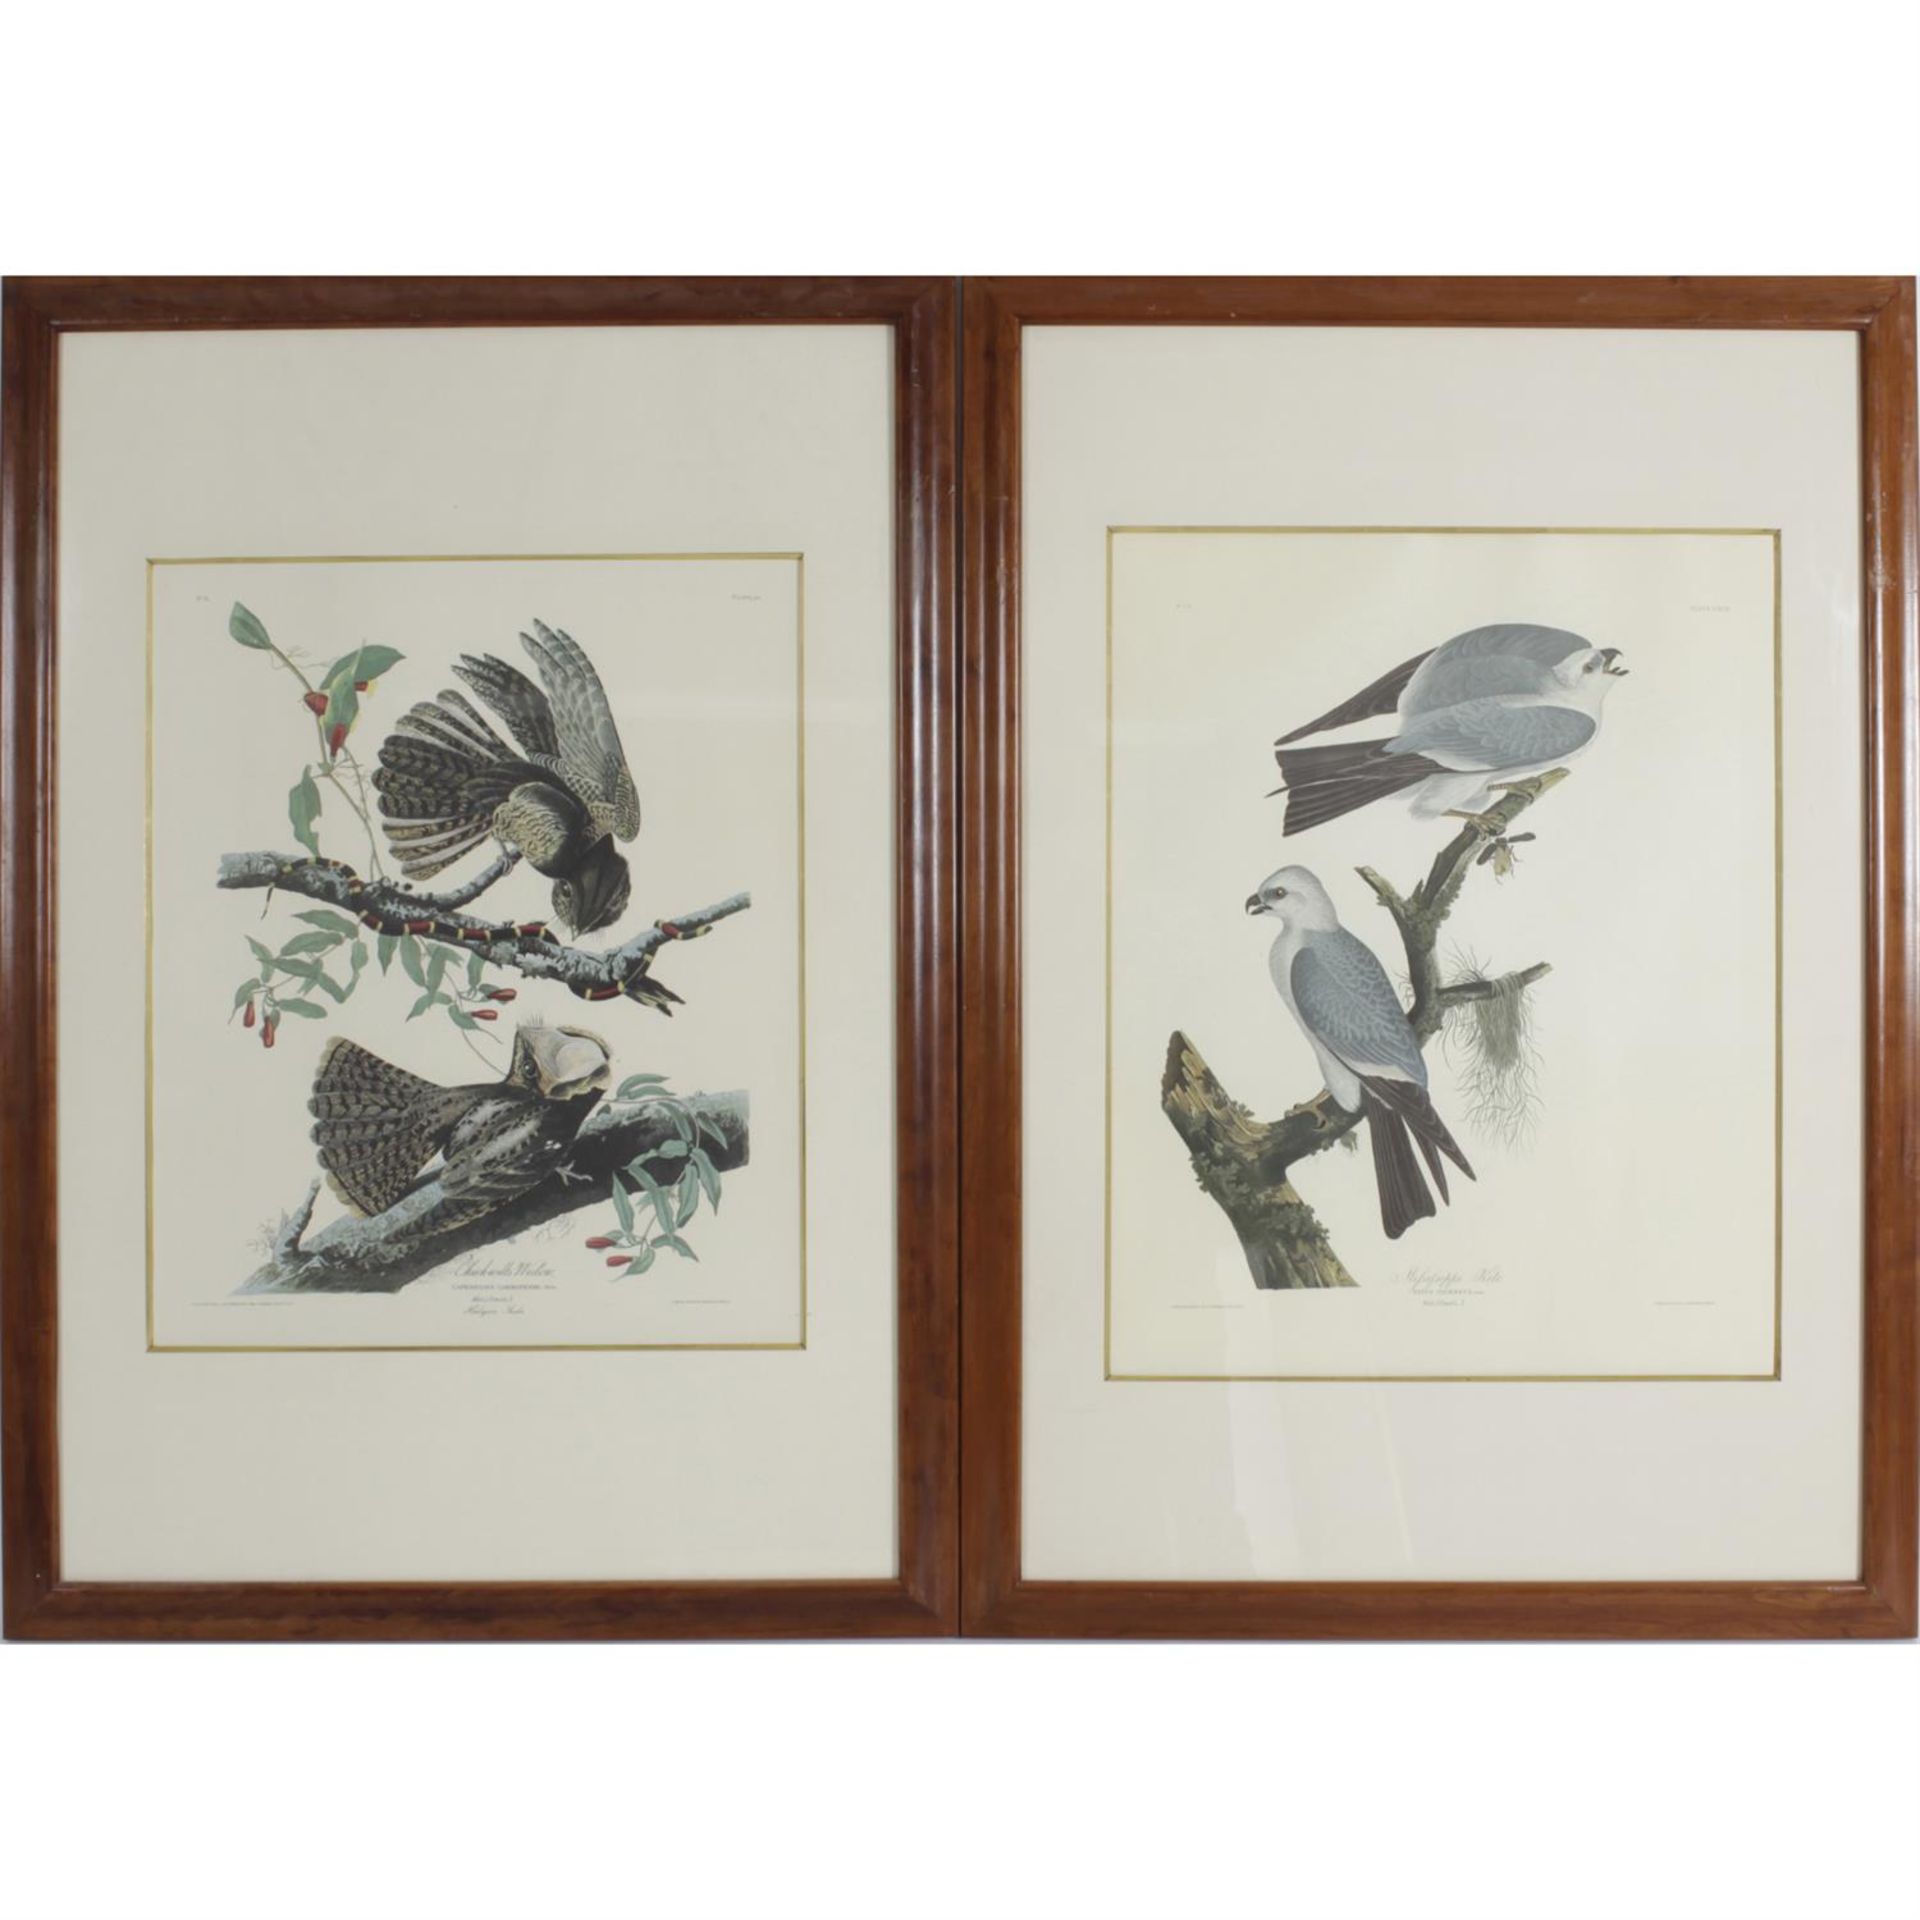 After John James Audubow, fourteen framed and glazed photolithographs.